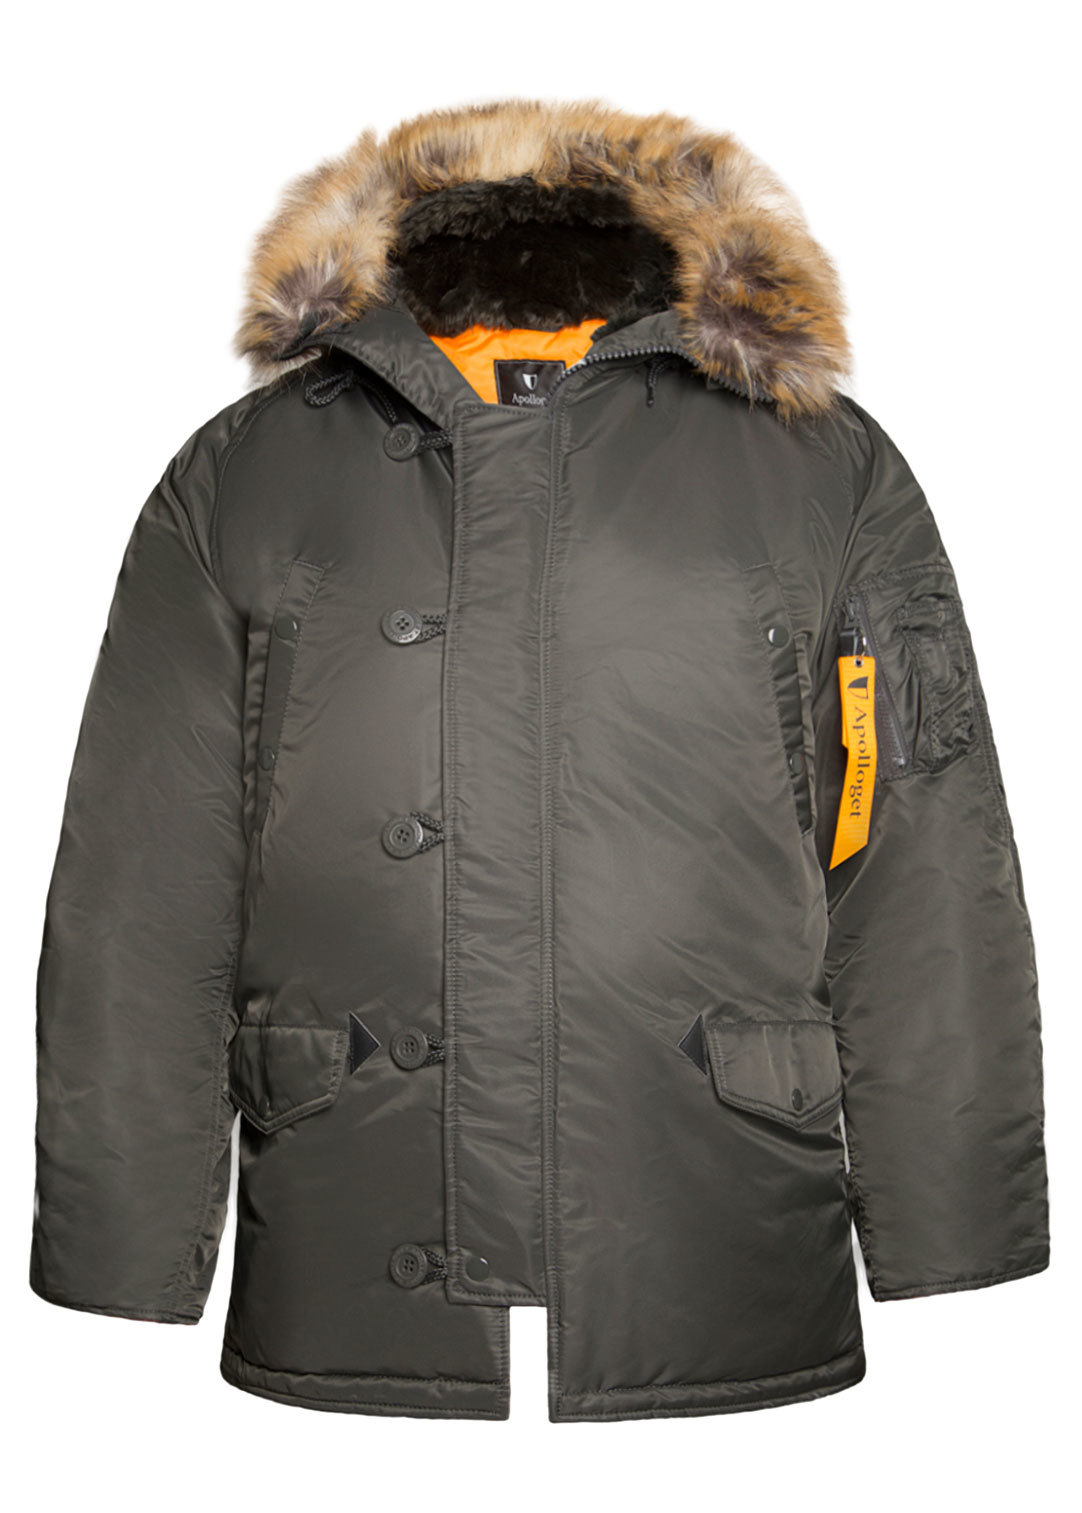 Куртка Аляска  Apolloget N-3B Regular (т.серая - beluga/orange)